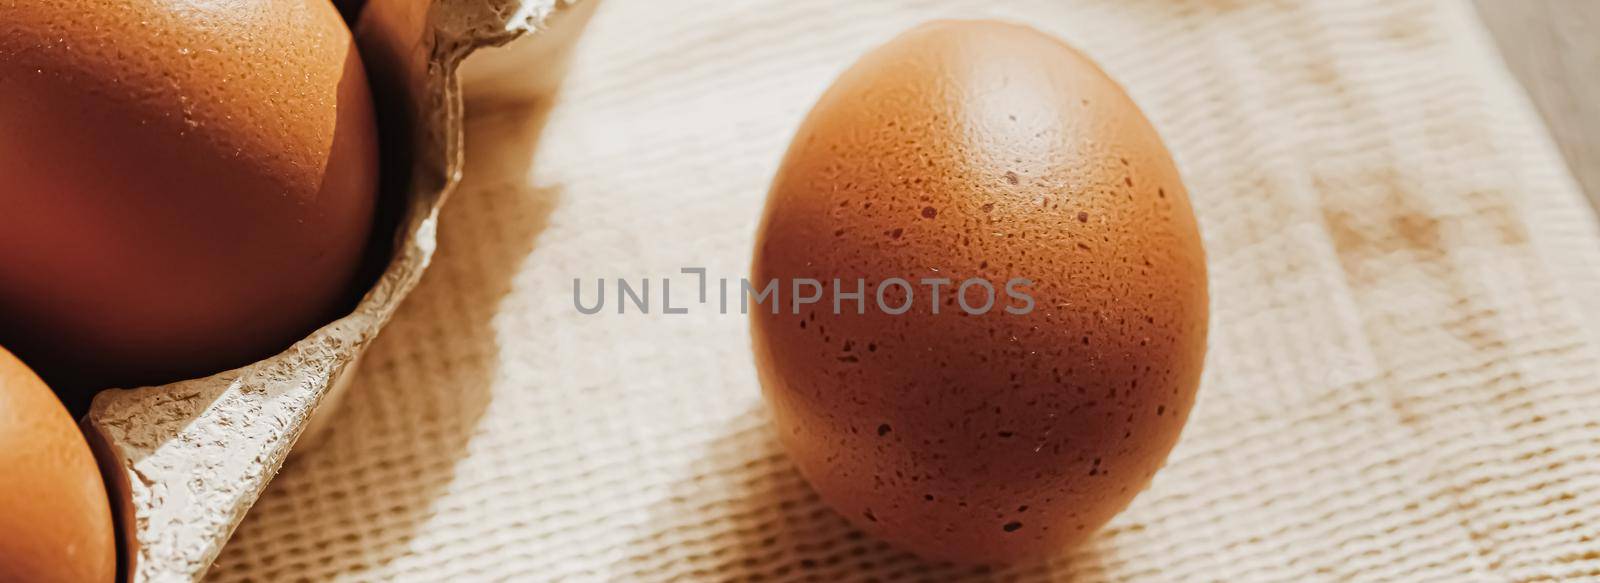 organic farm eggs in egg box and rustic cloth napkins, closeup